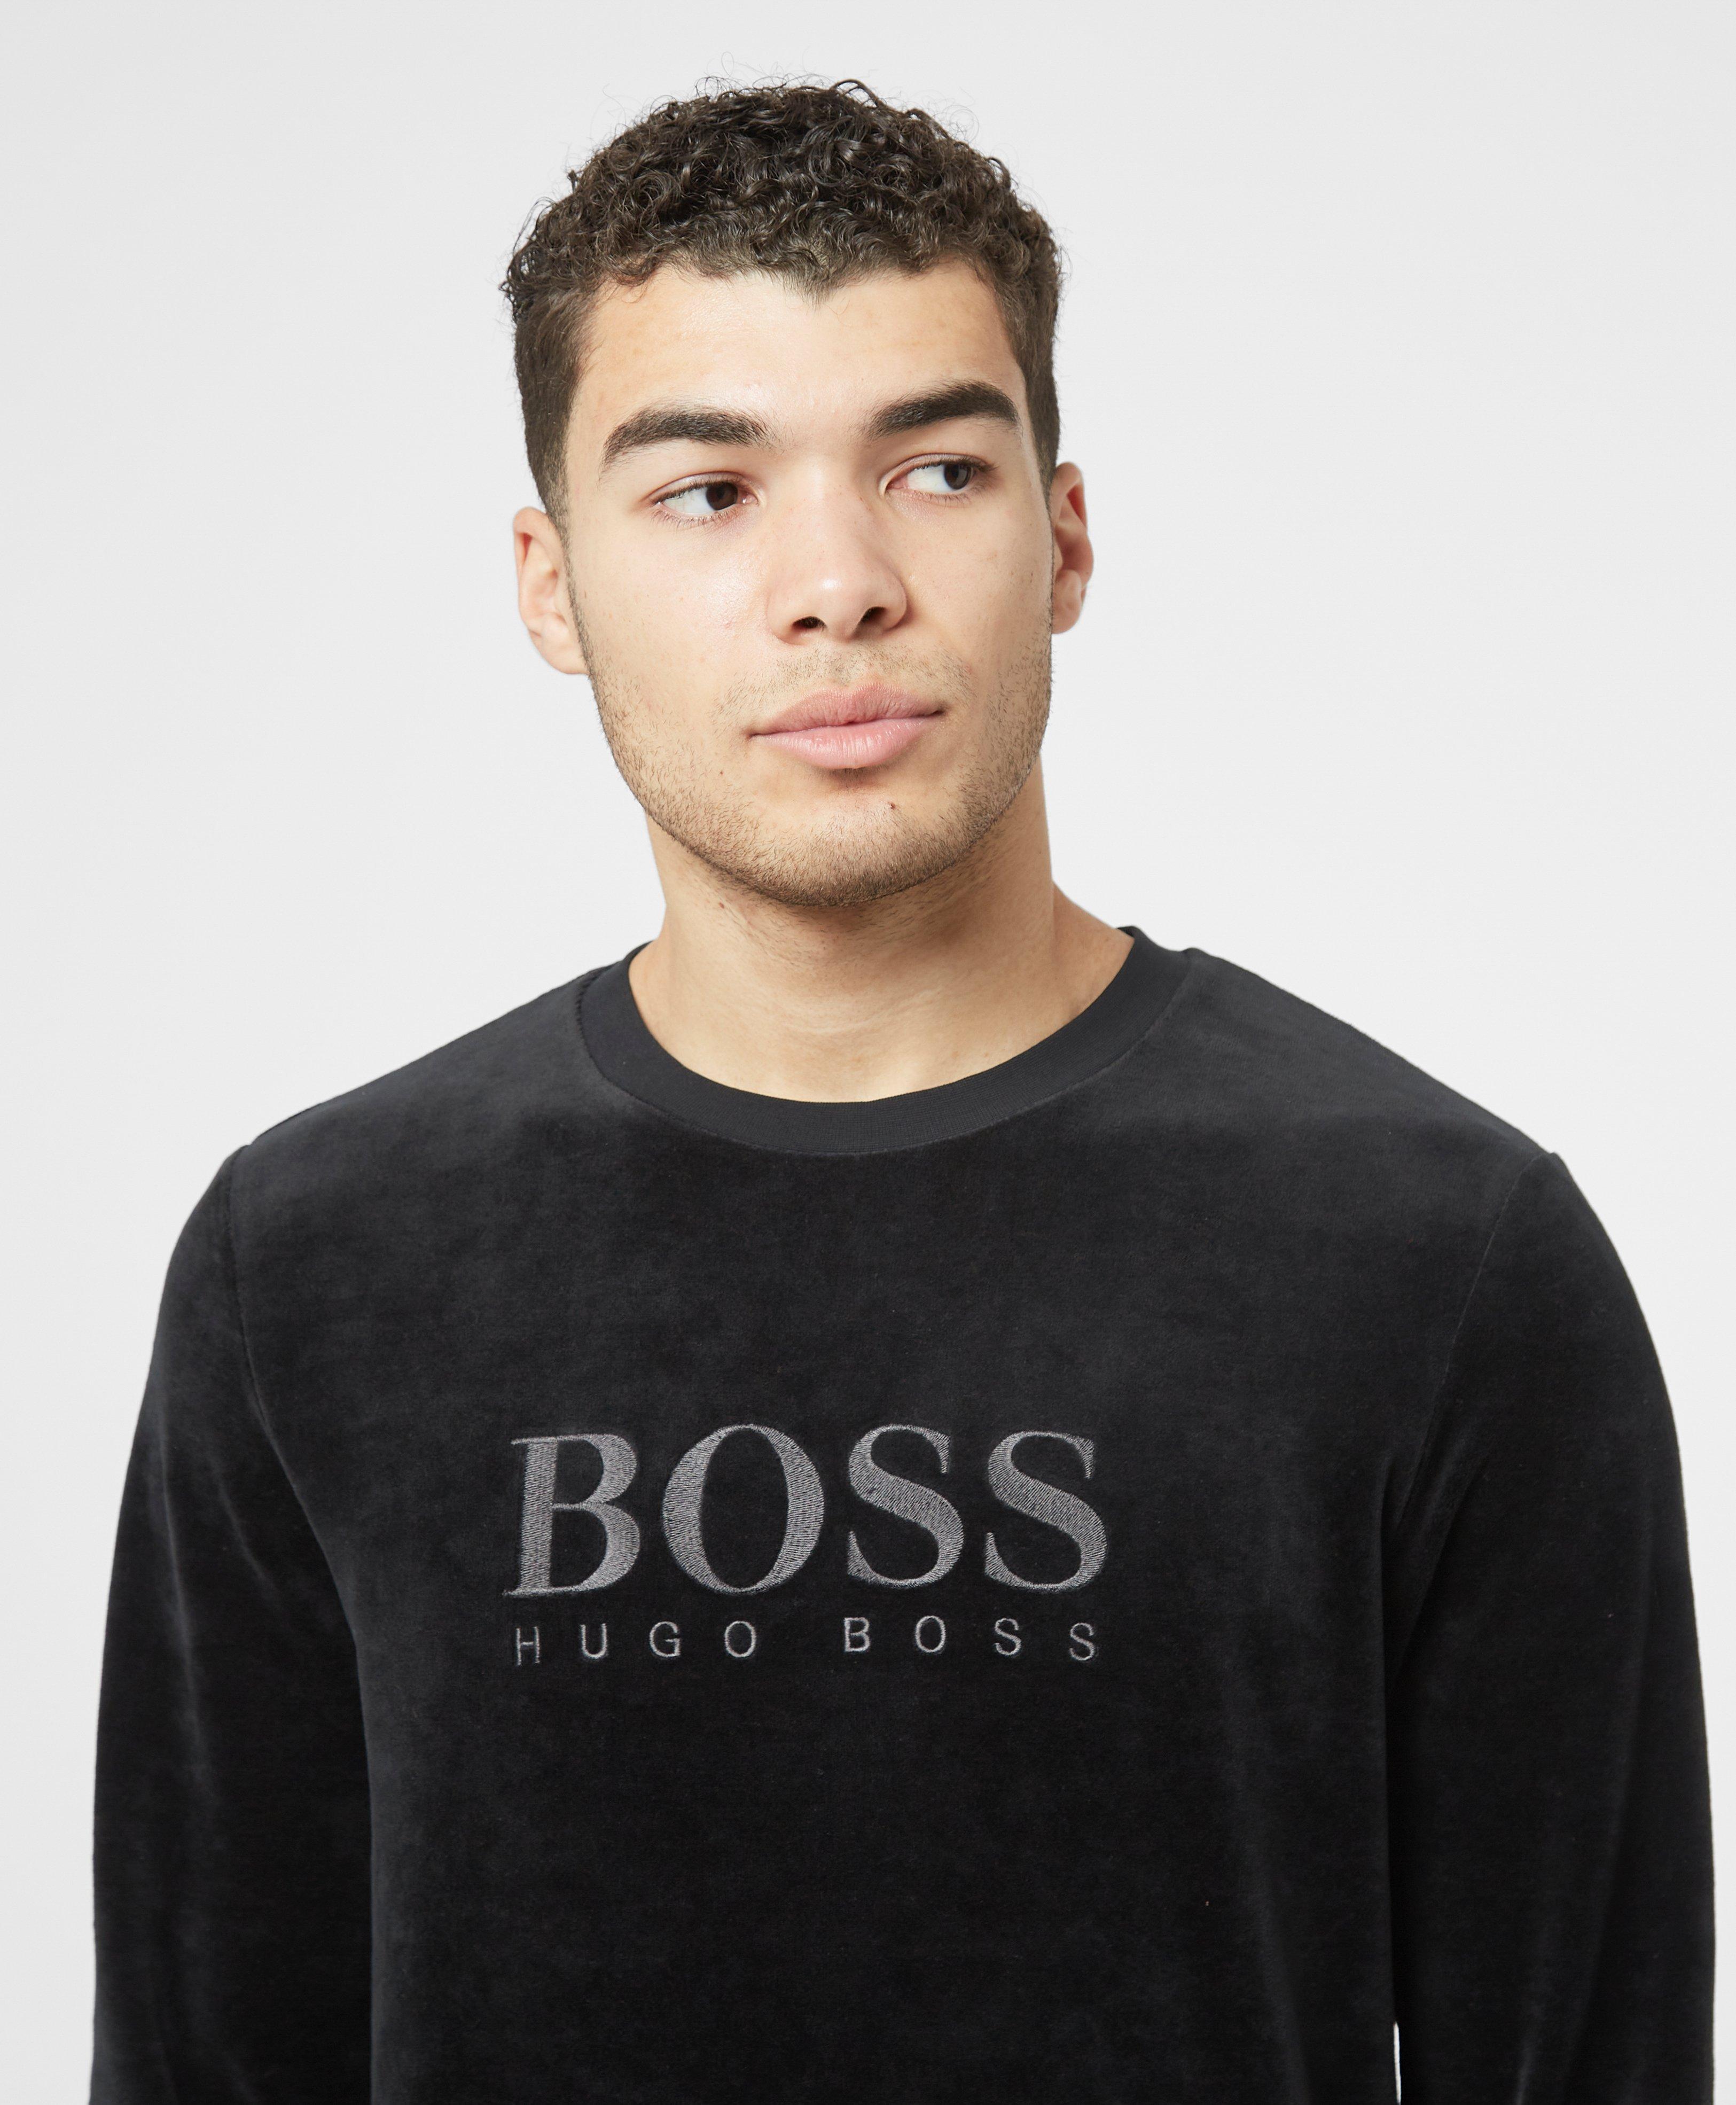 BOSS by HUGO BOSS Velour Crew Sweatshirt in Black for Men | Lyst